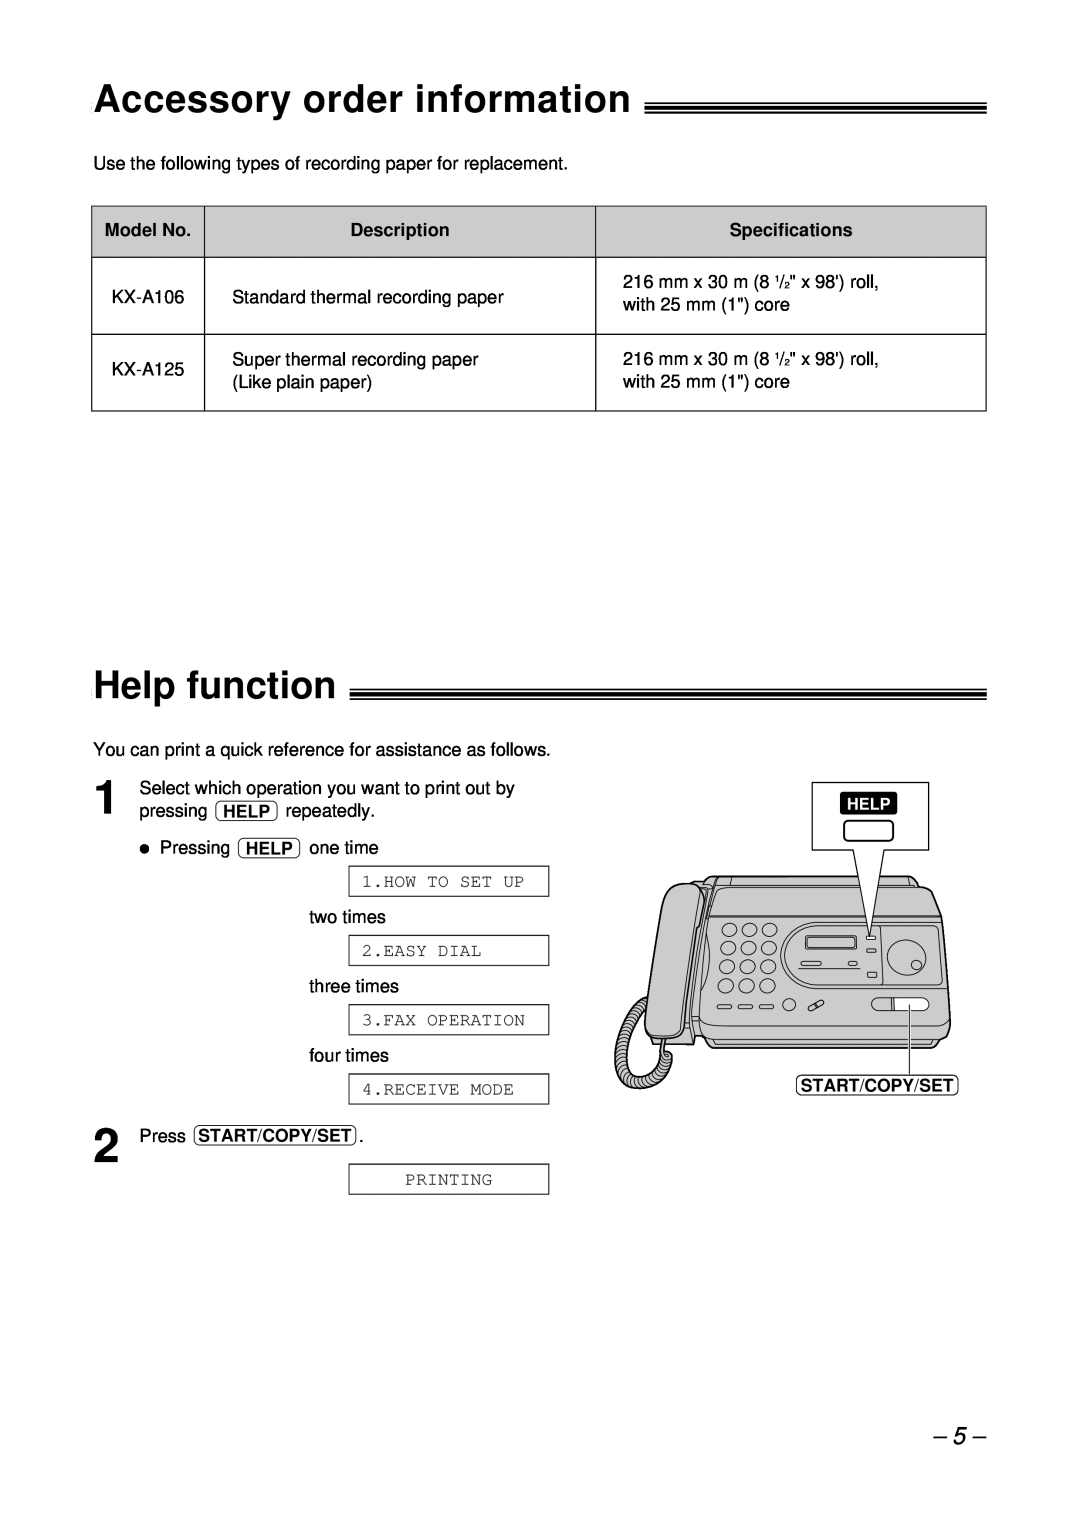 Panasonic KX-FT34HK Accessory order information, Help function, Model No, Description, Specifications, Start/Copy/Set 